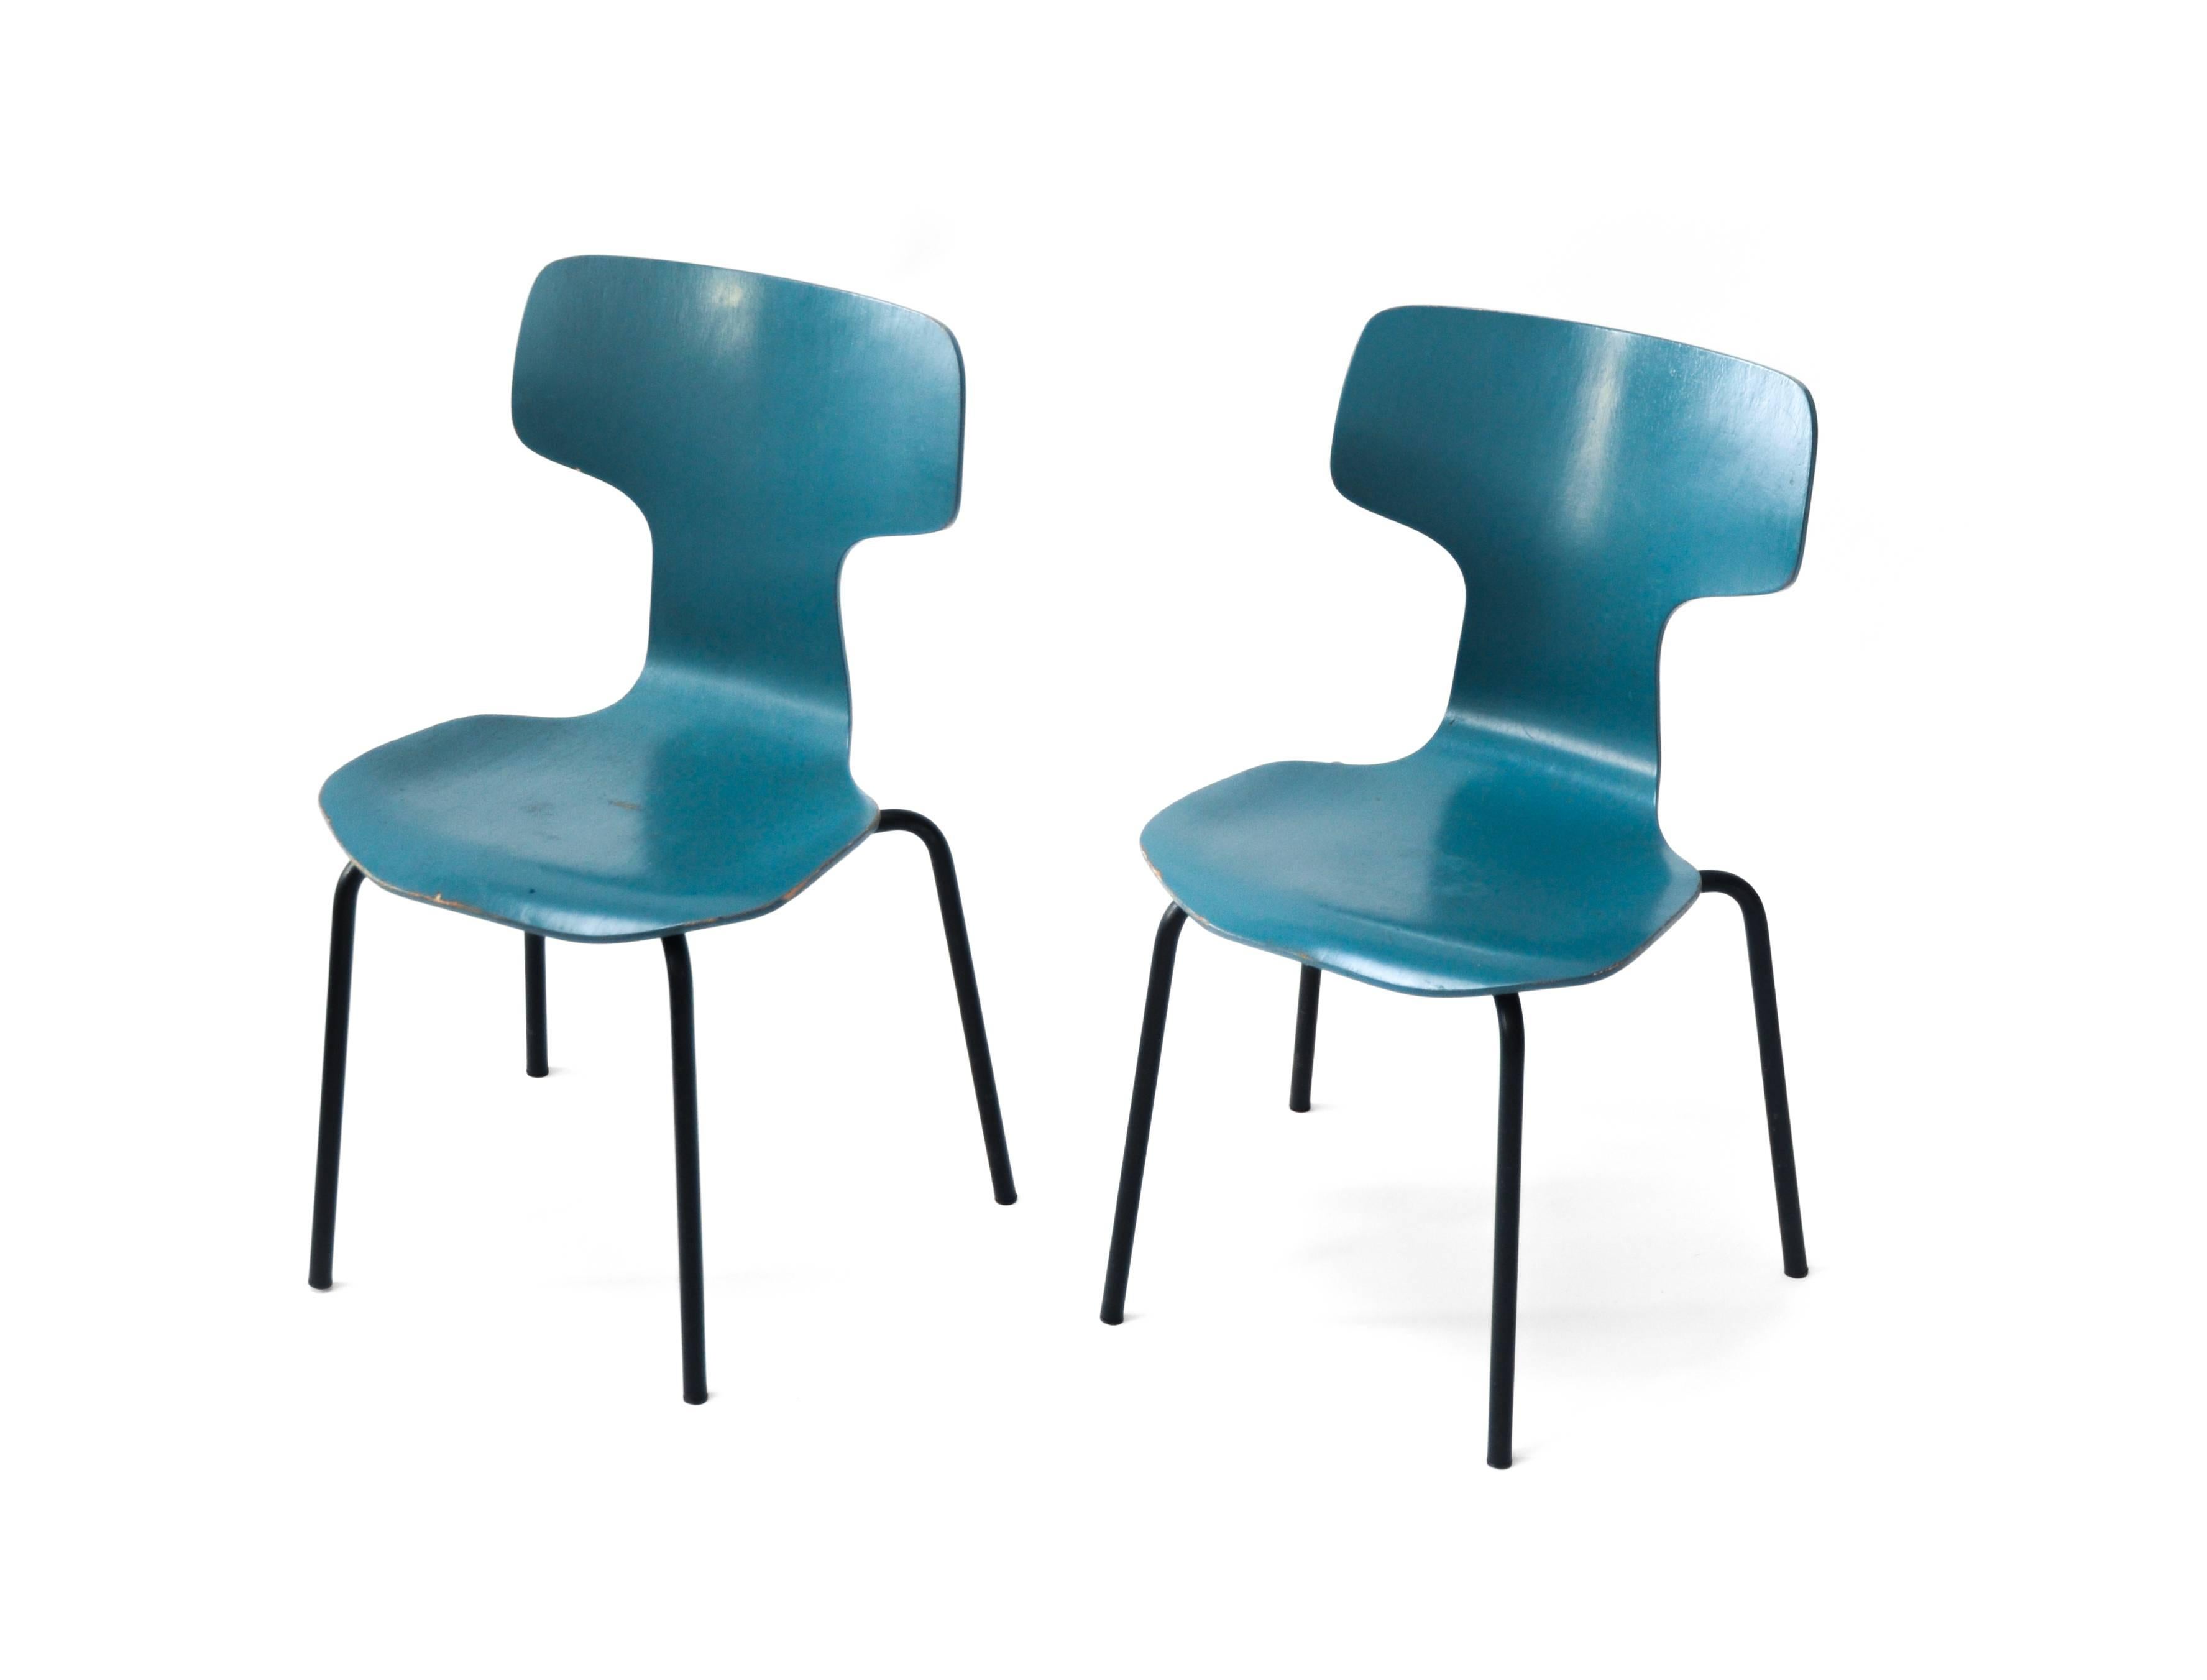 Steel Pair of Model 3103 Chairs, Designed by Arne Jacobsen, Vintage, Denmark, 1955 For Sale